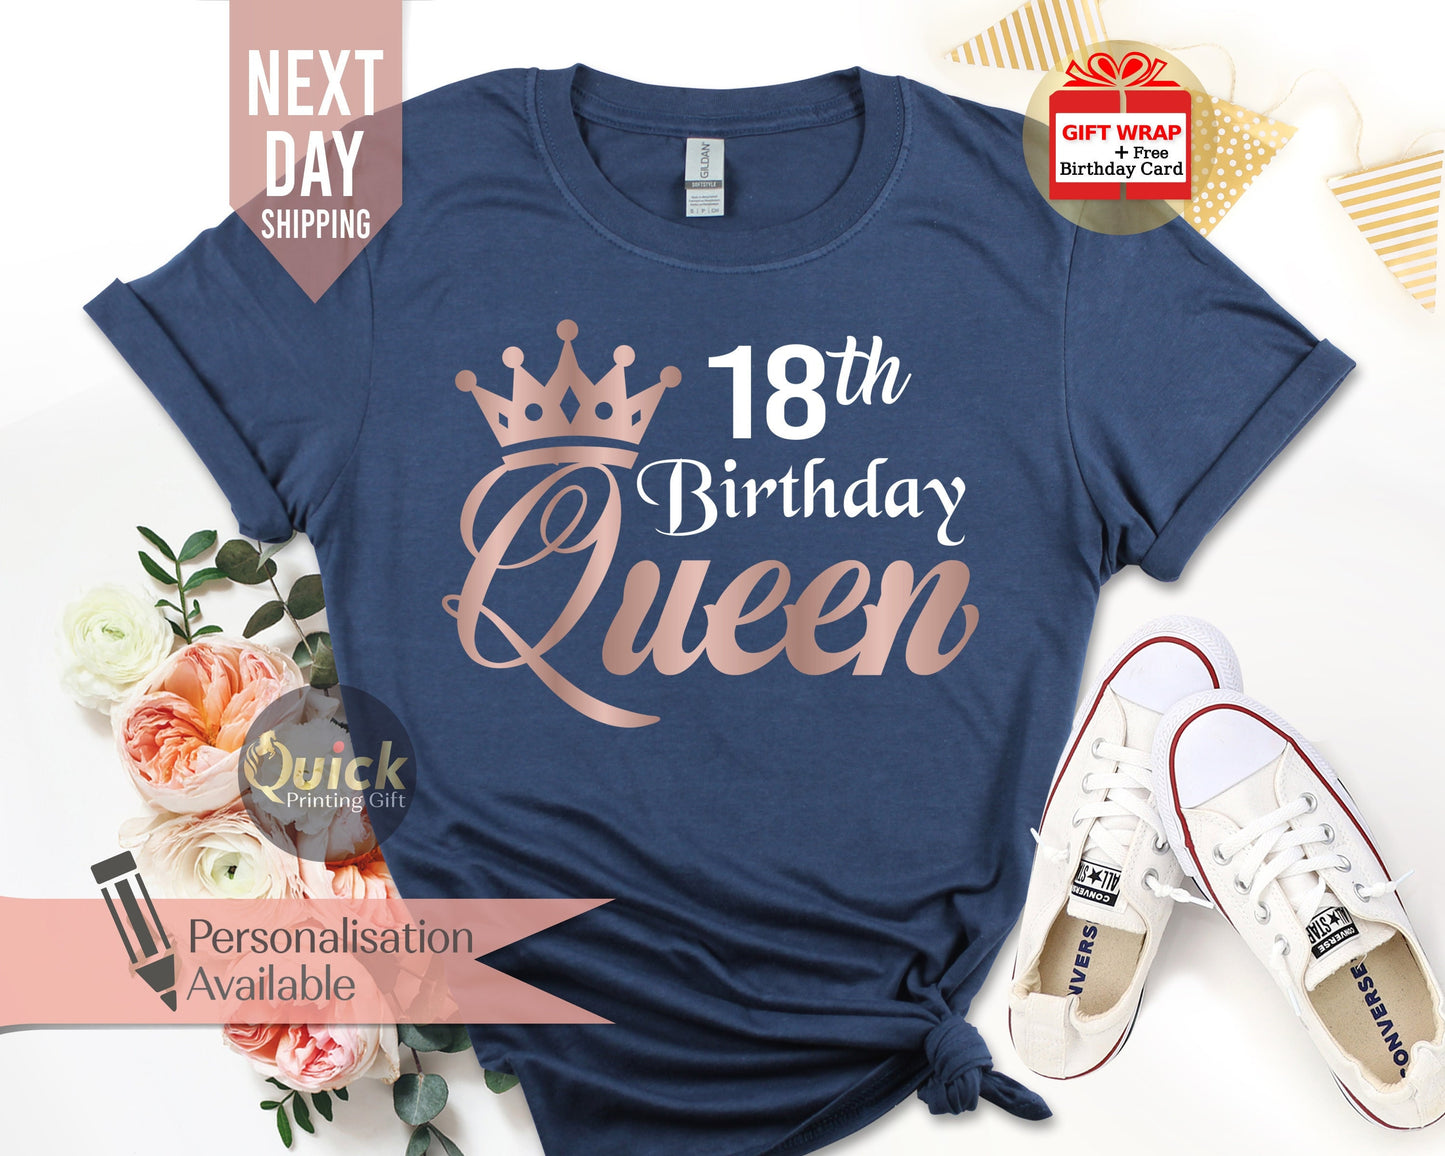 18th Birthday Queen Tshirt, 18th Birthday Party Shirts for Ladies Girls, Funny Birthday T Shirt, 18th Birthday Gift for Friend